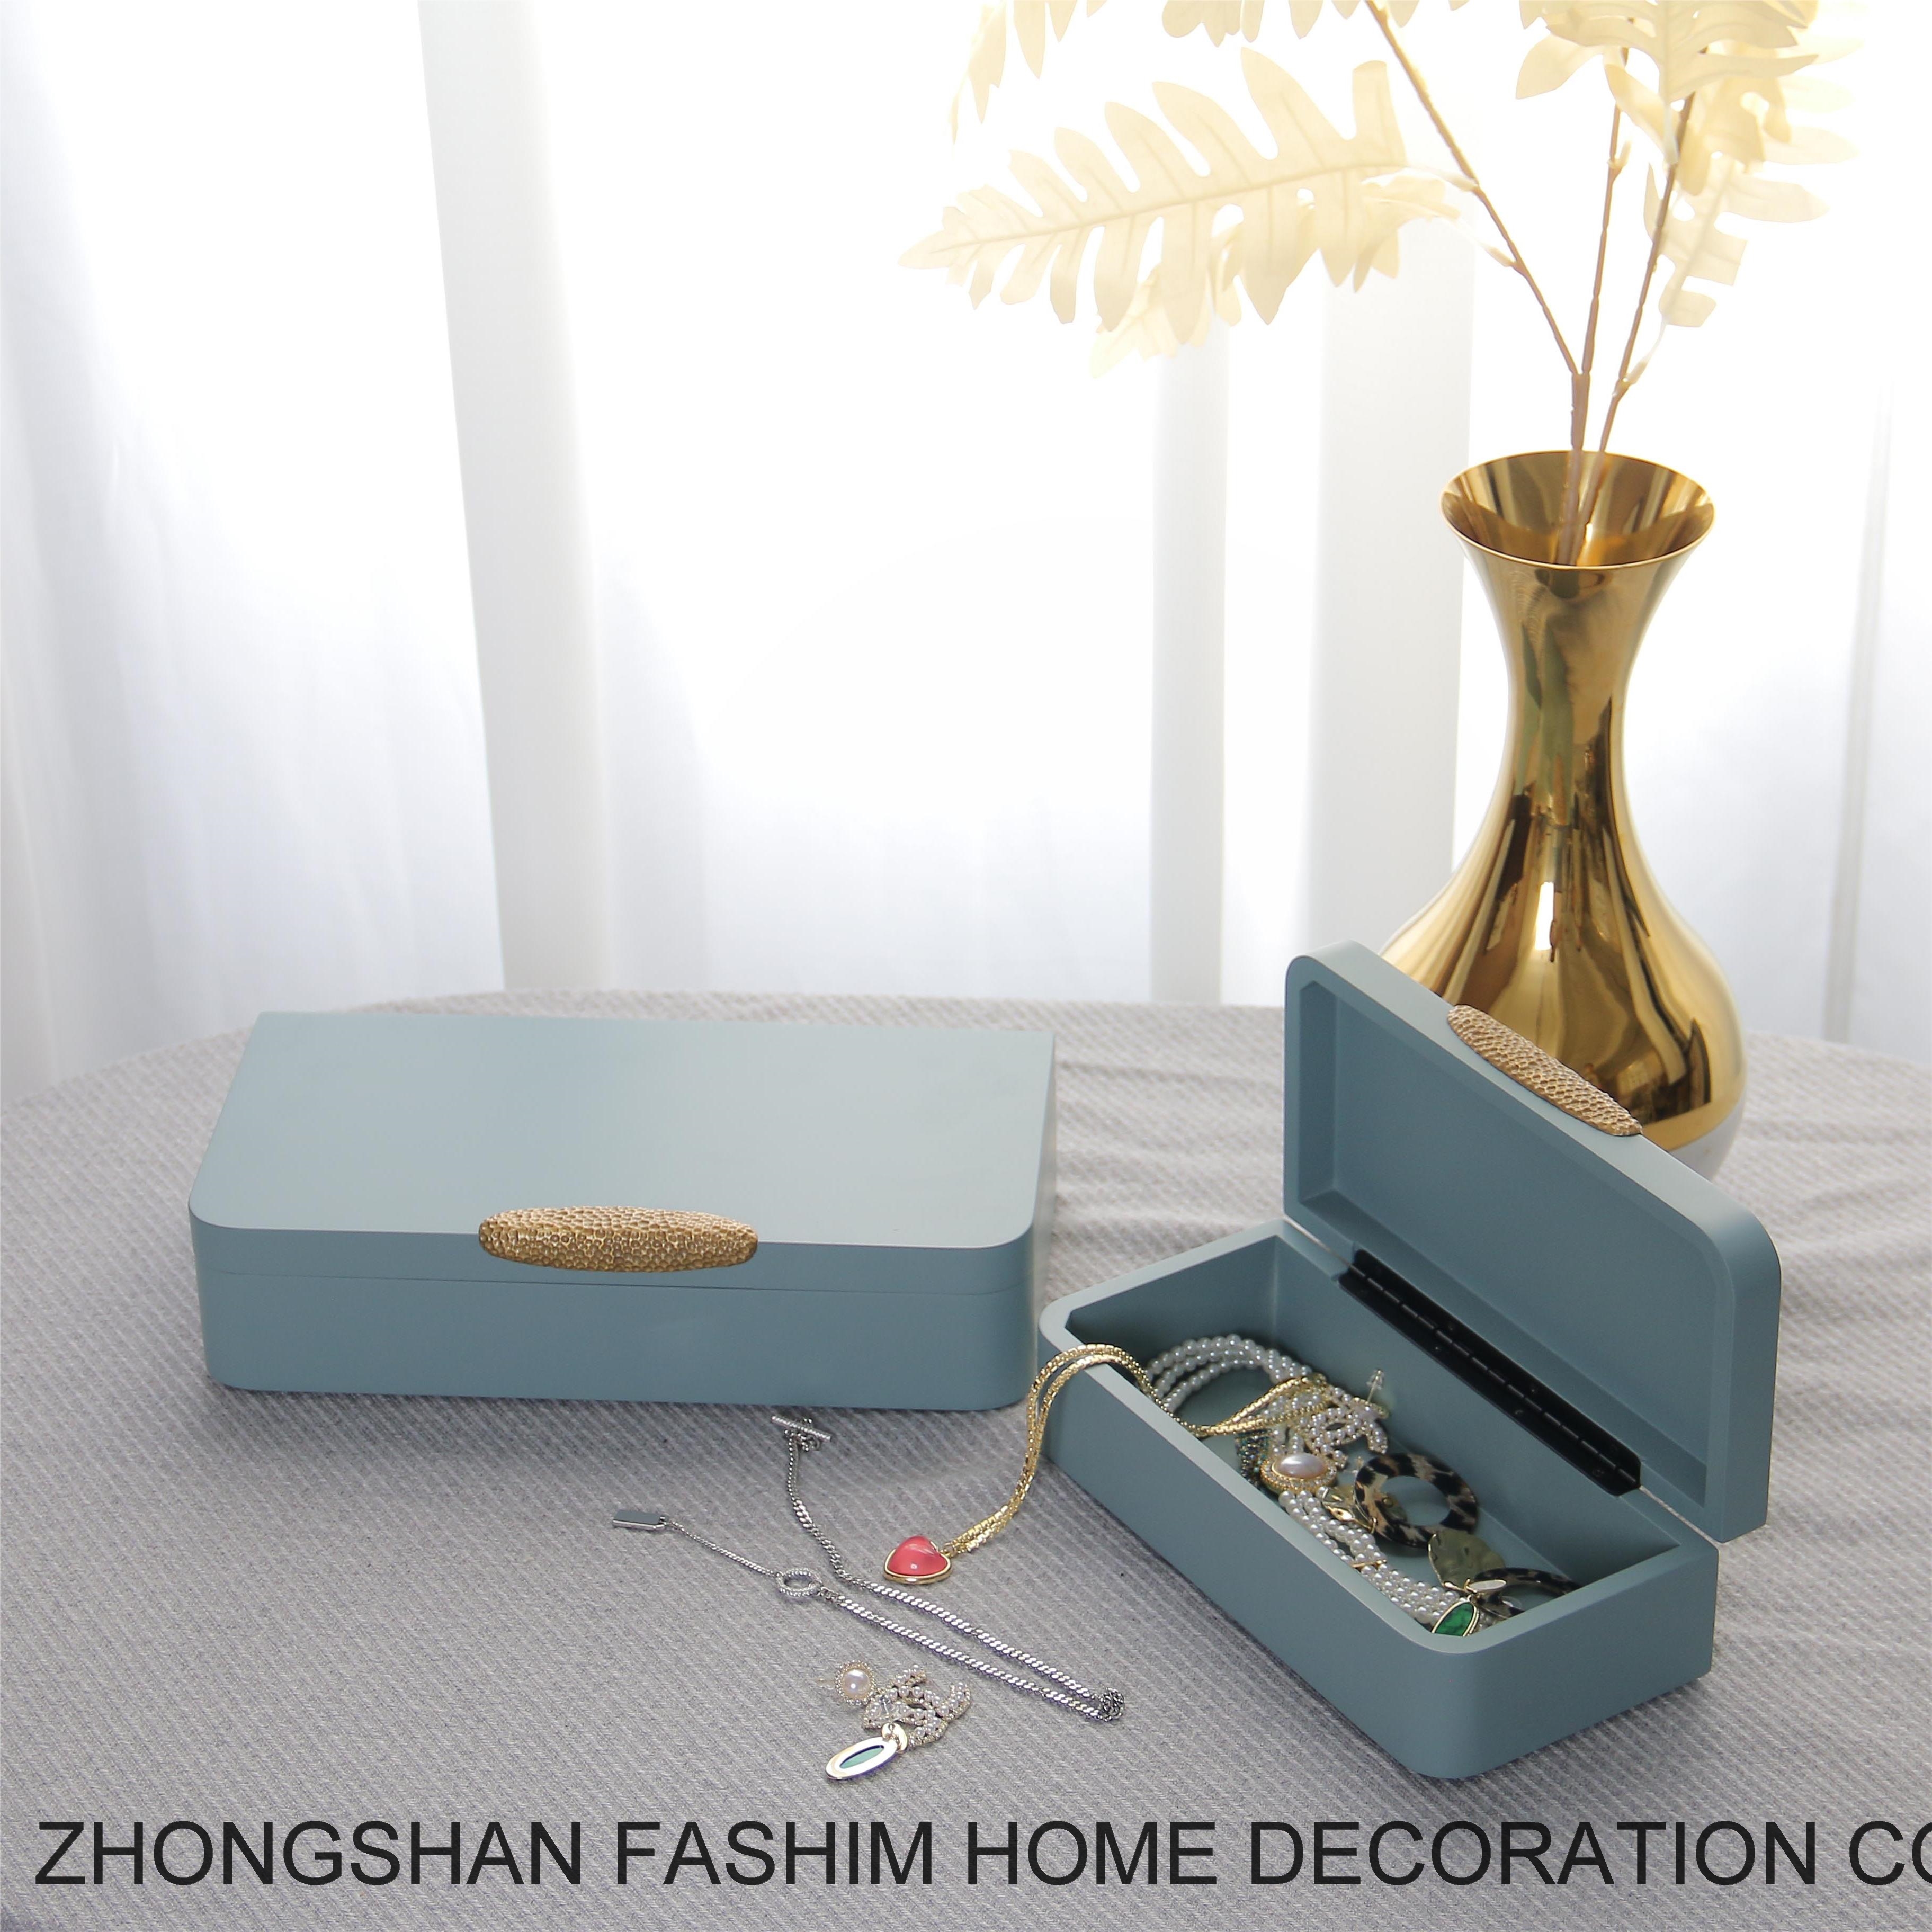 Fashimdecor Elegant home decoration and practical jewelry box